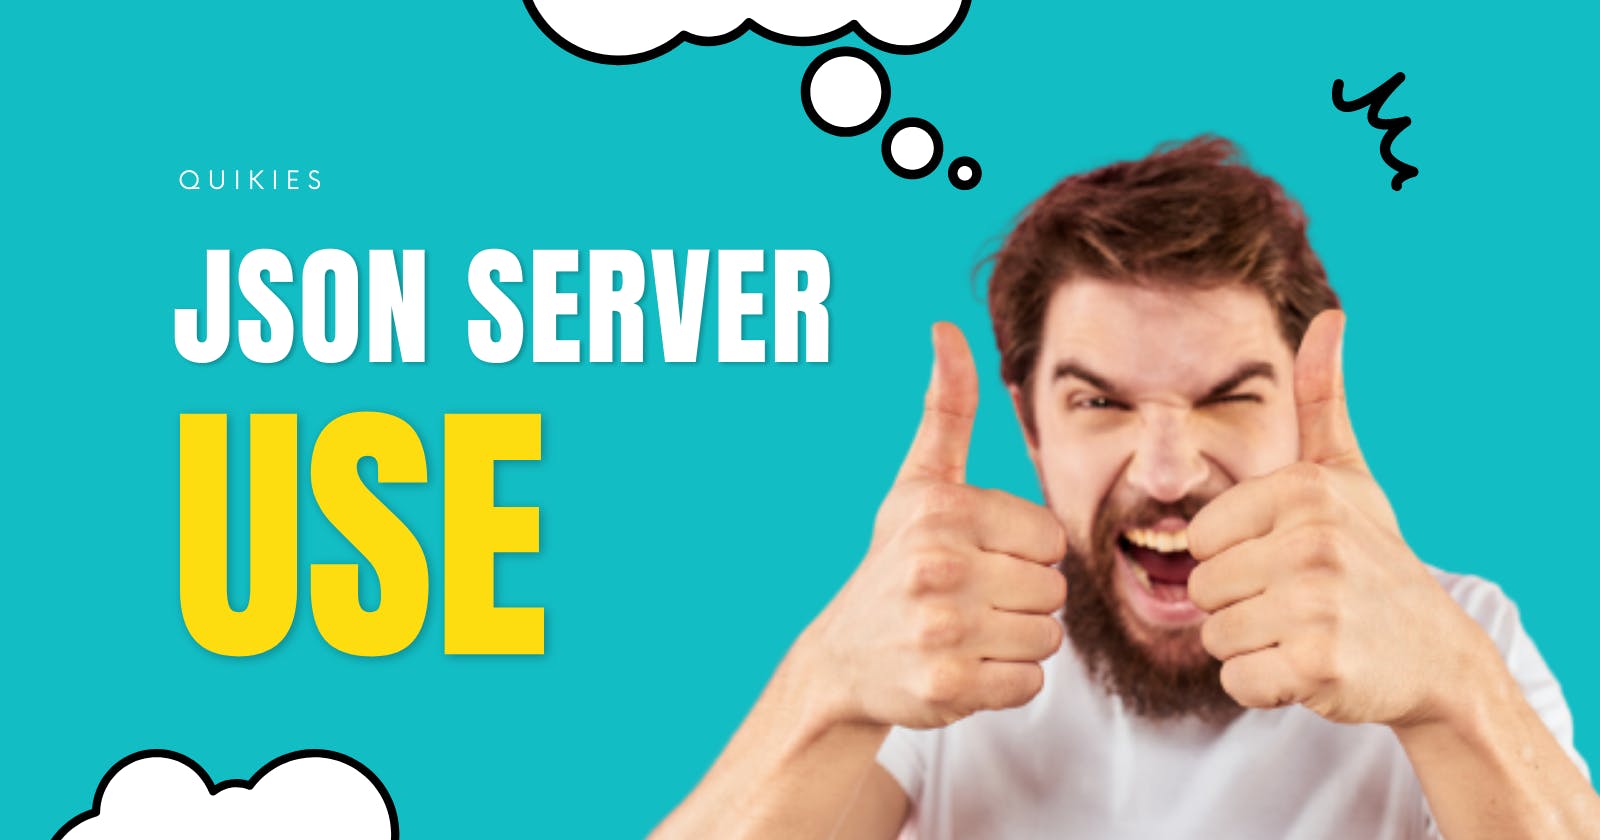 the basic steps to use JSON Server